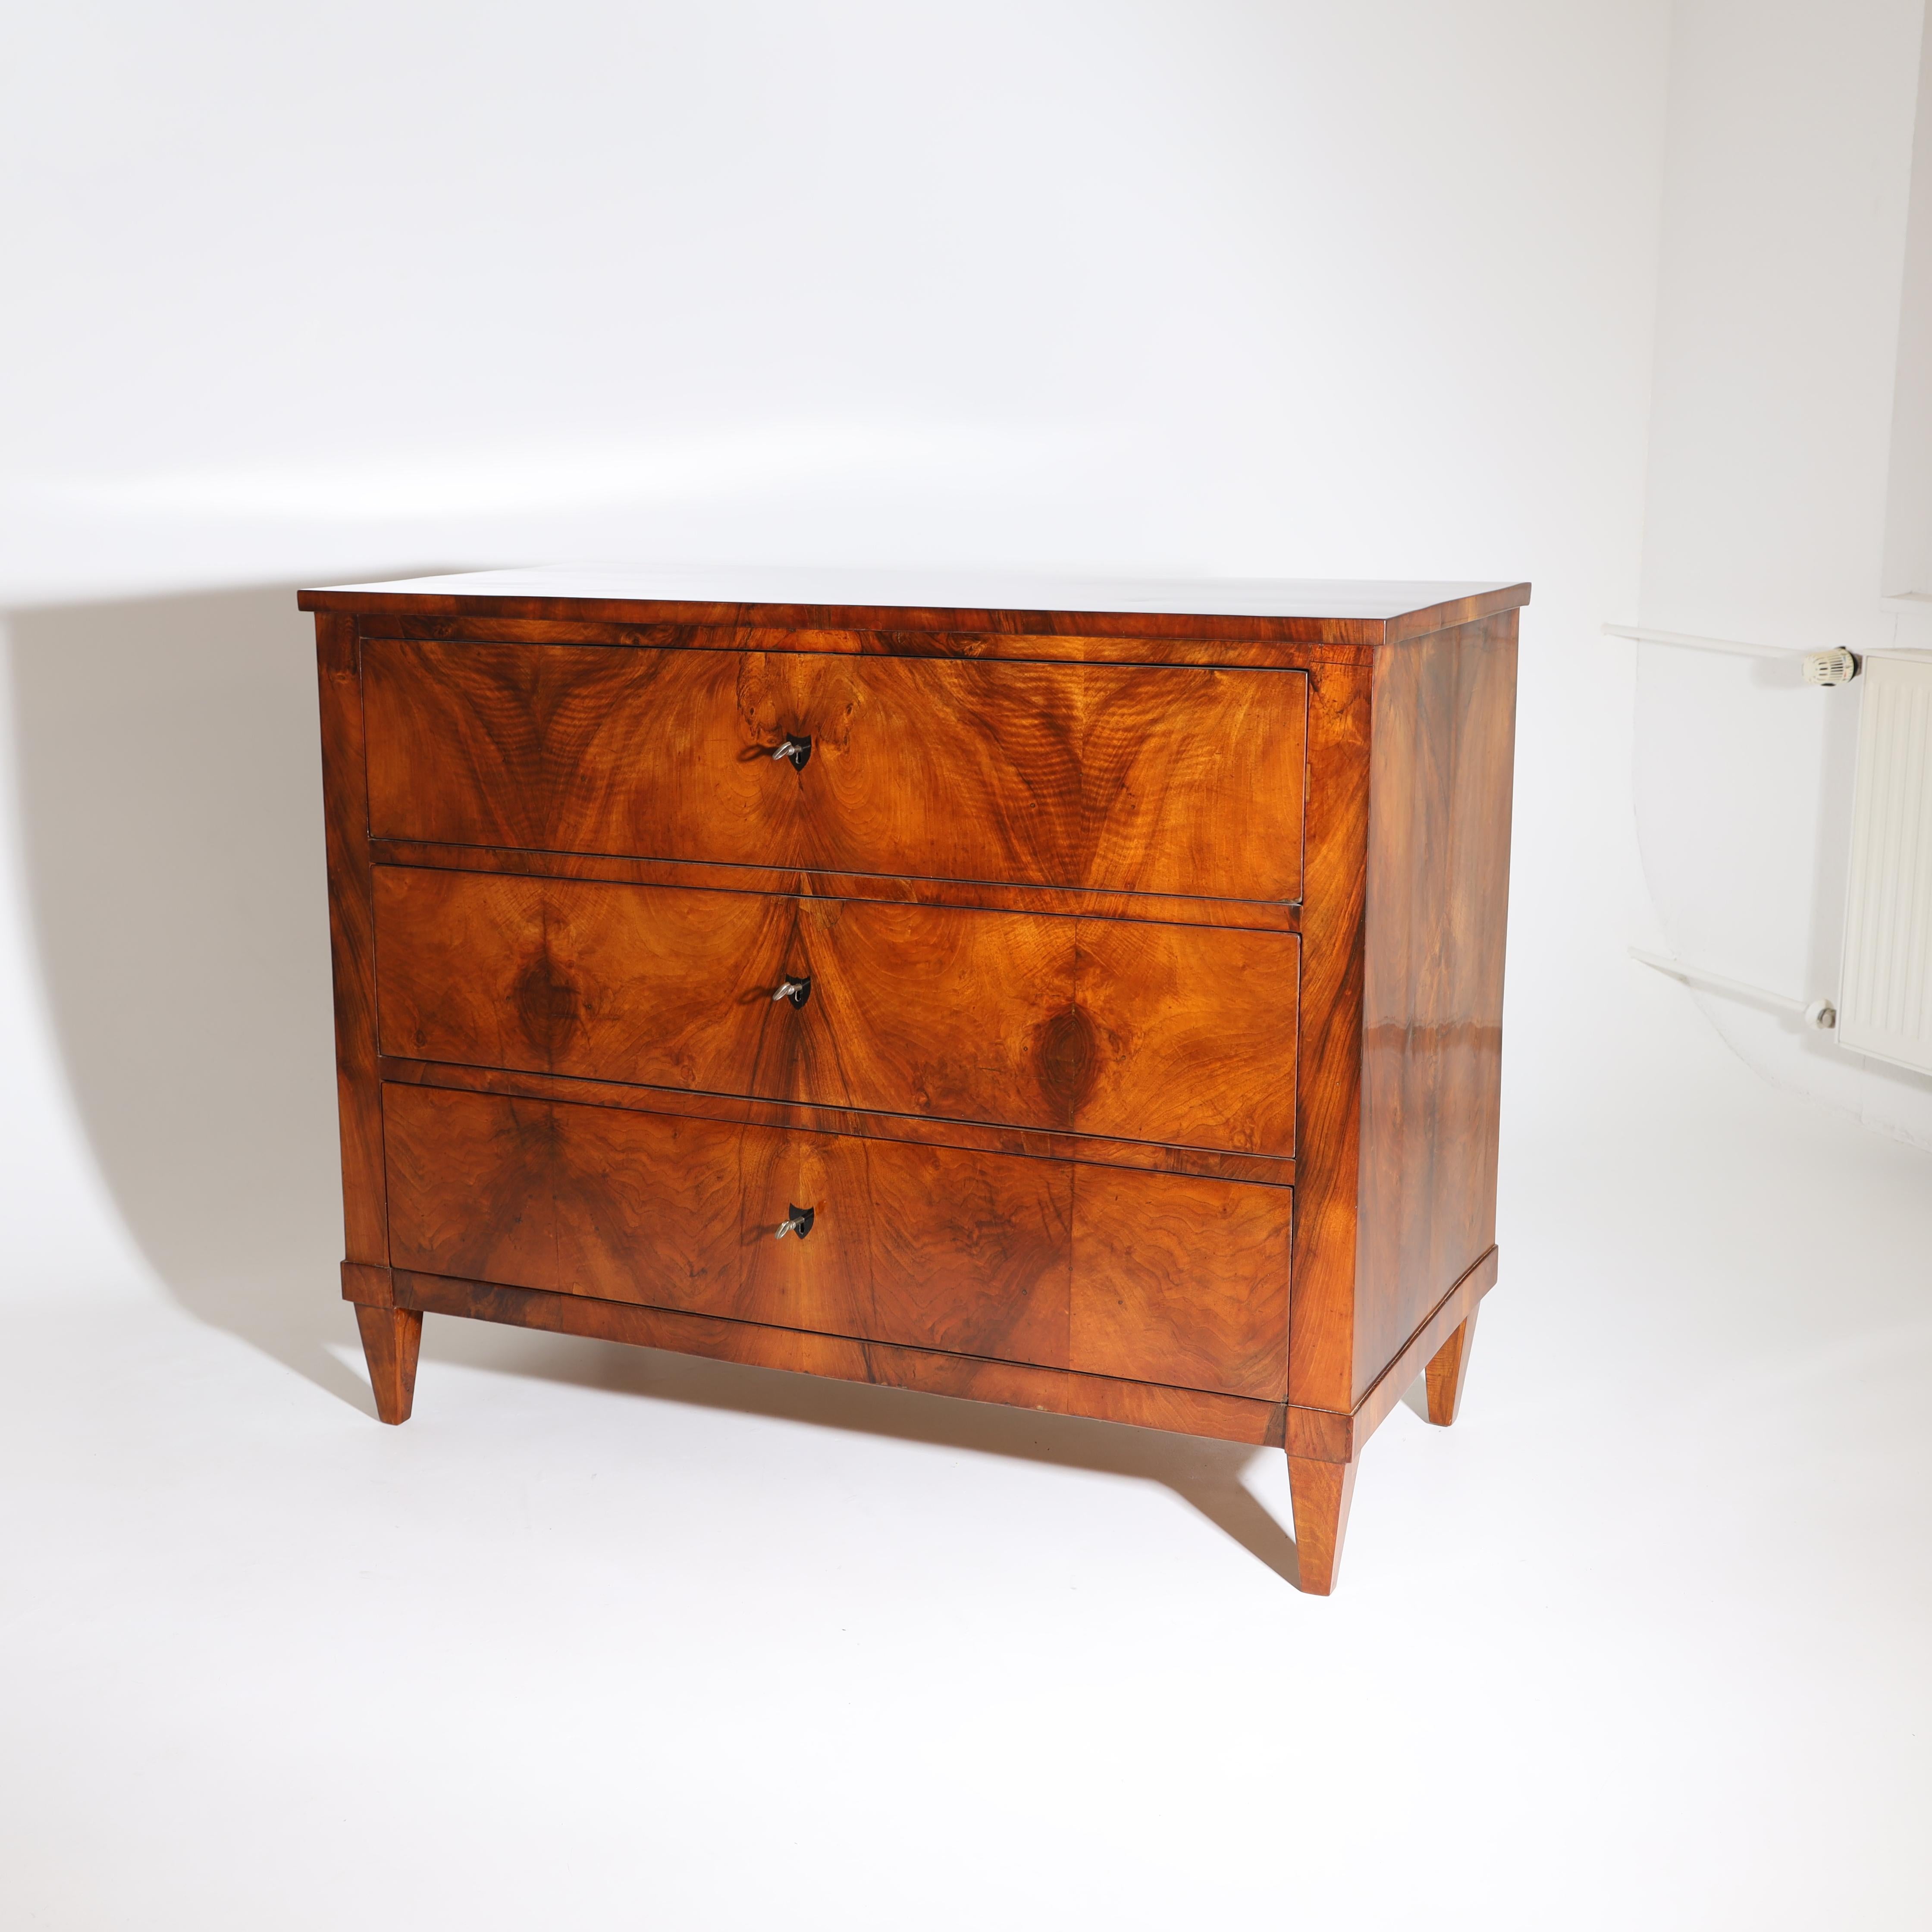 A single Biedermeier chest of drawers. Walnut.